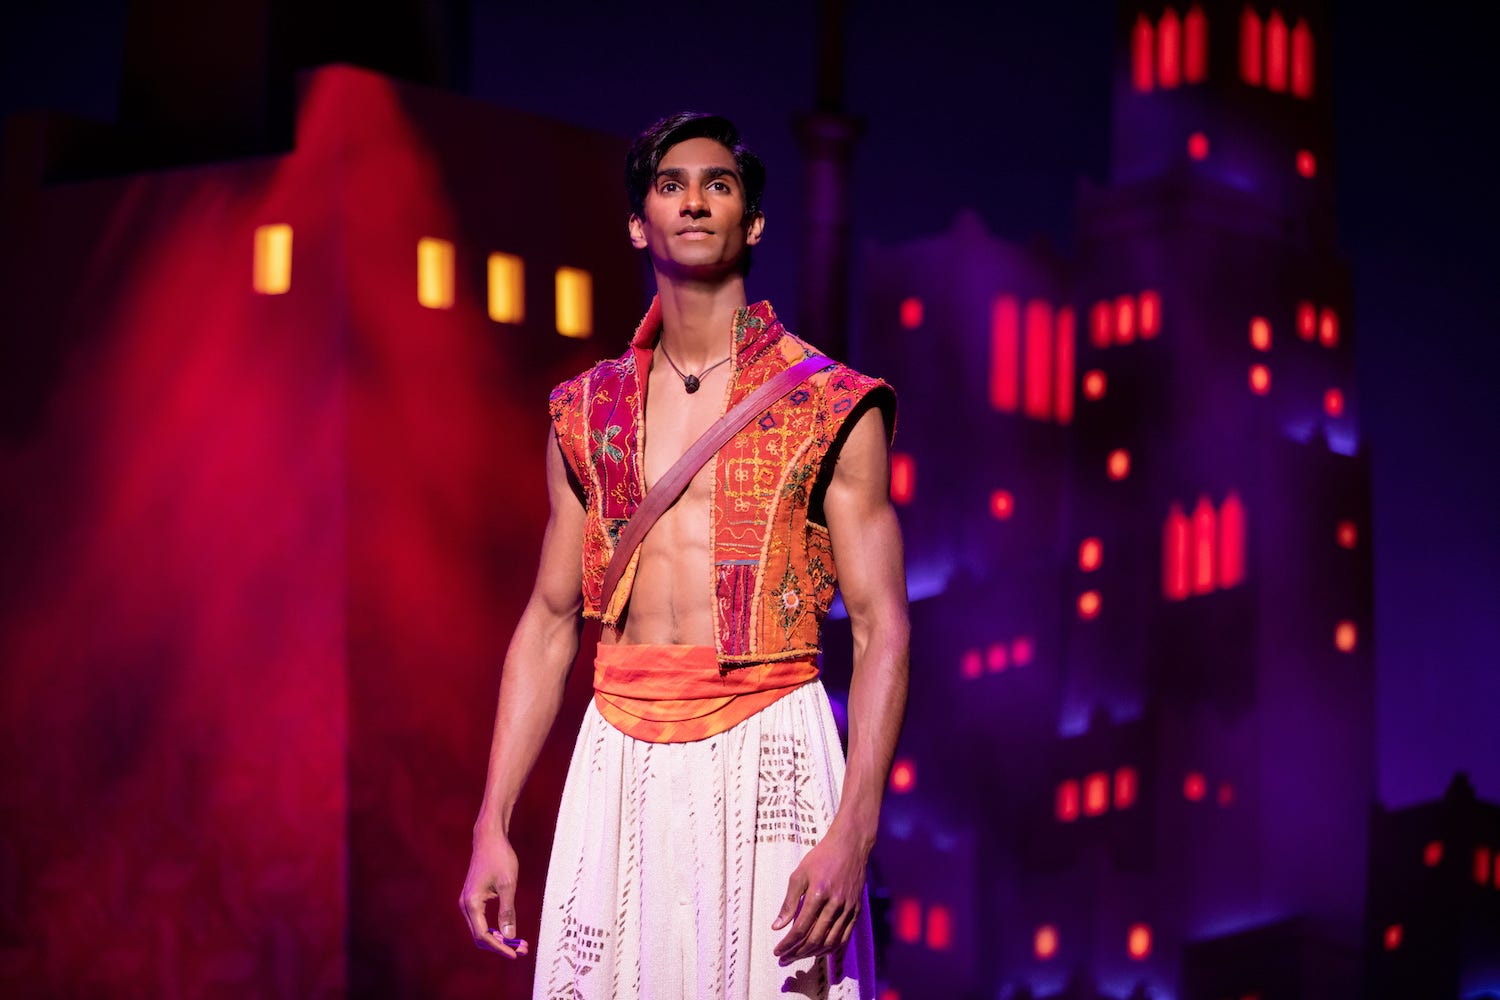 Michael Maliakel as Aladdin in Aladdin on Broadway photo by Matthew Murphy c Disney min